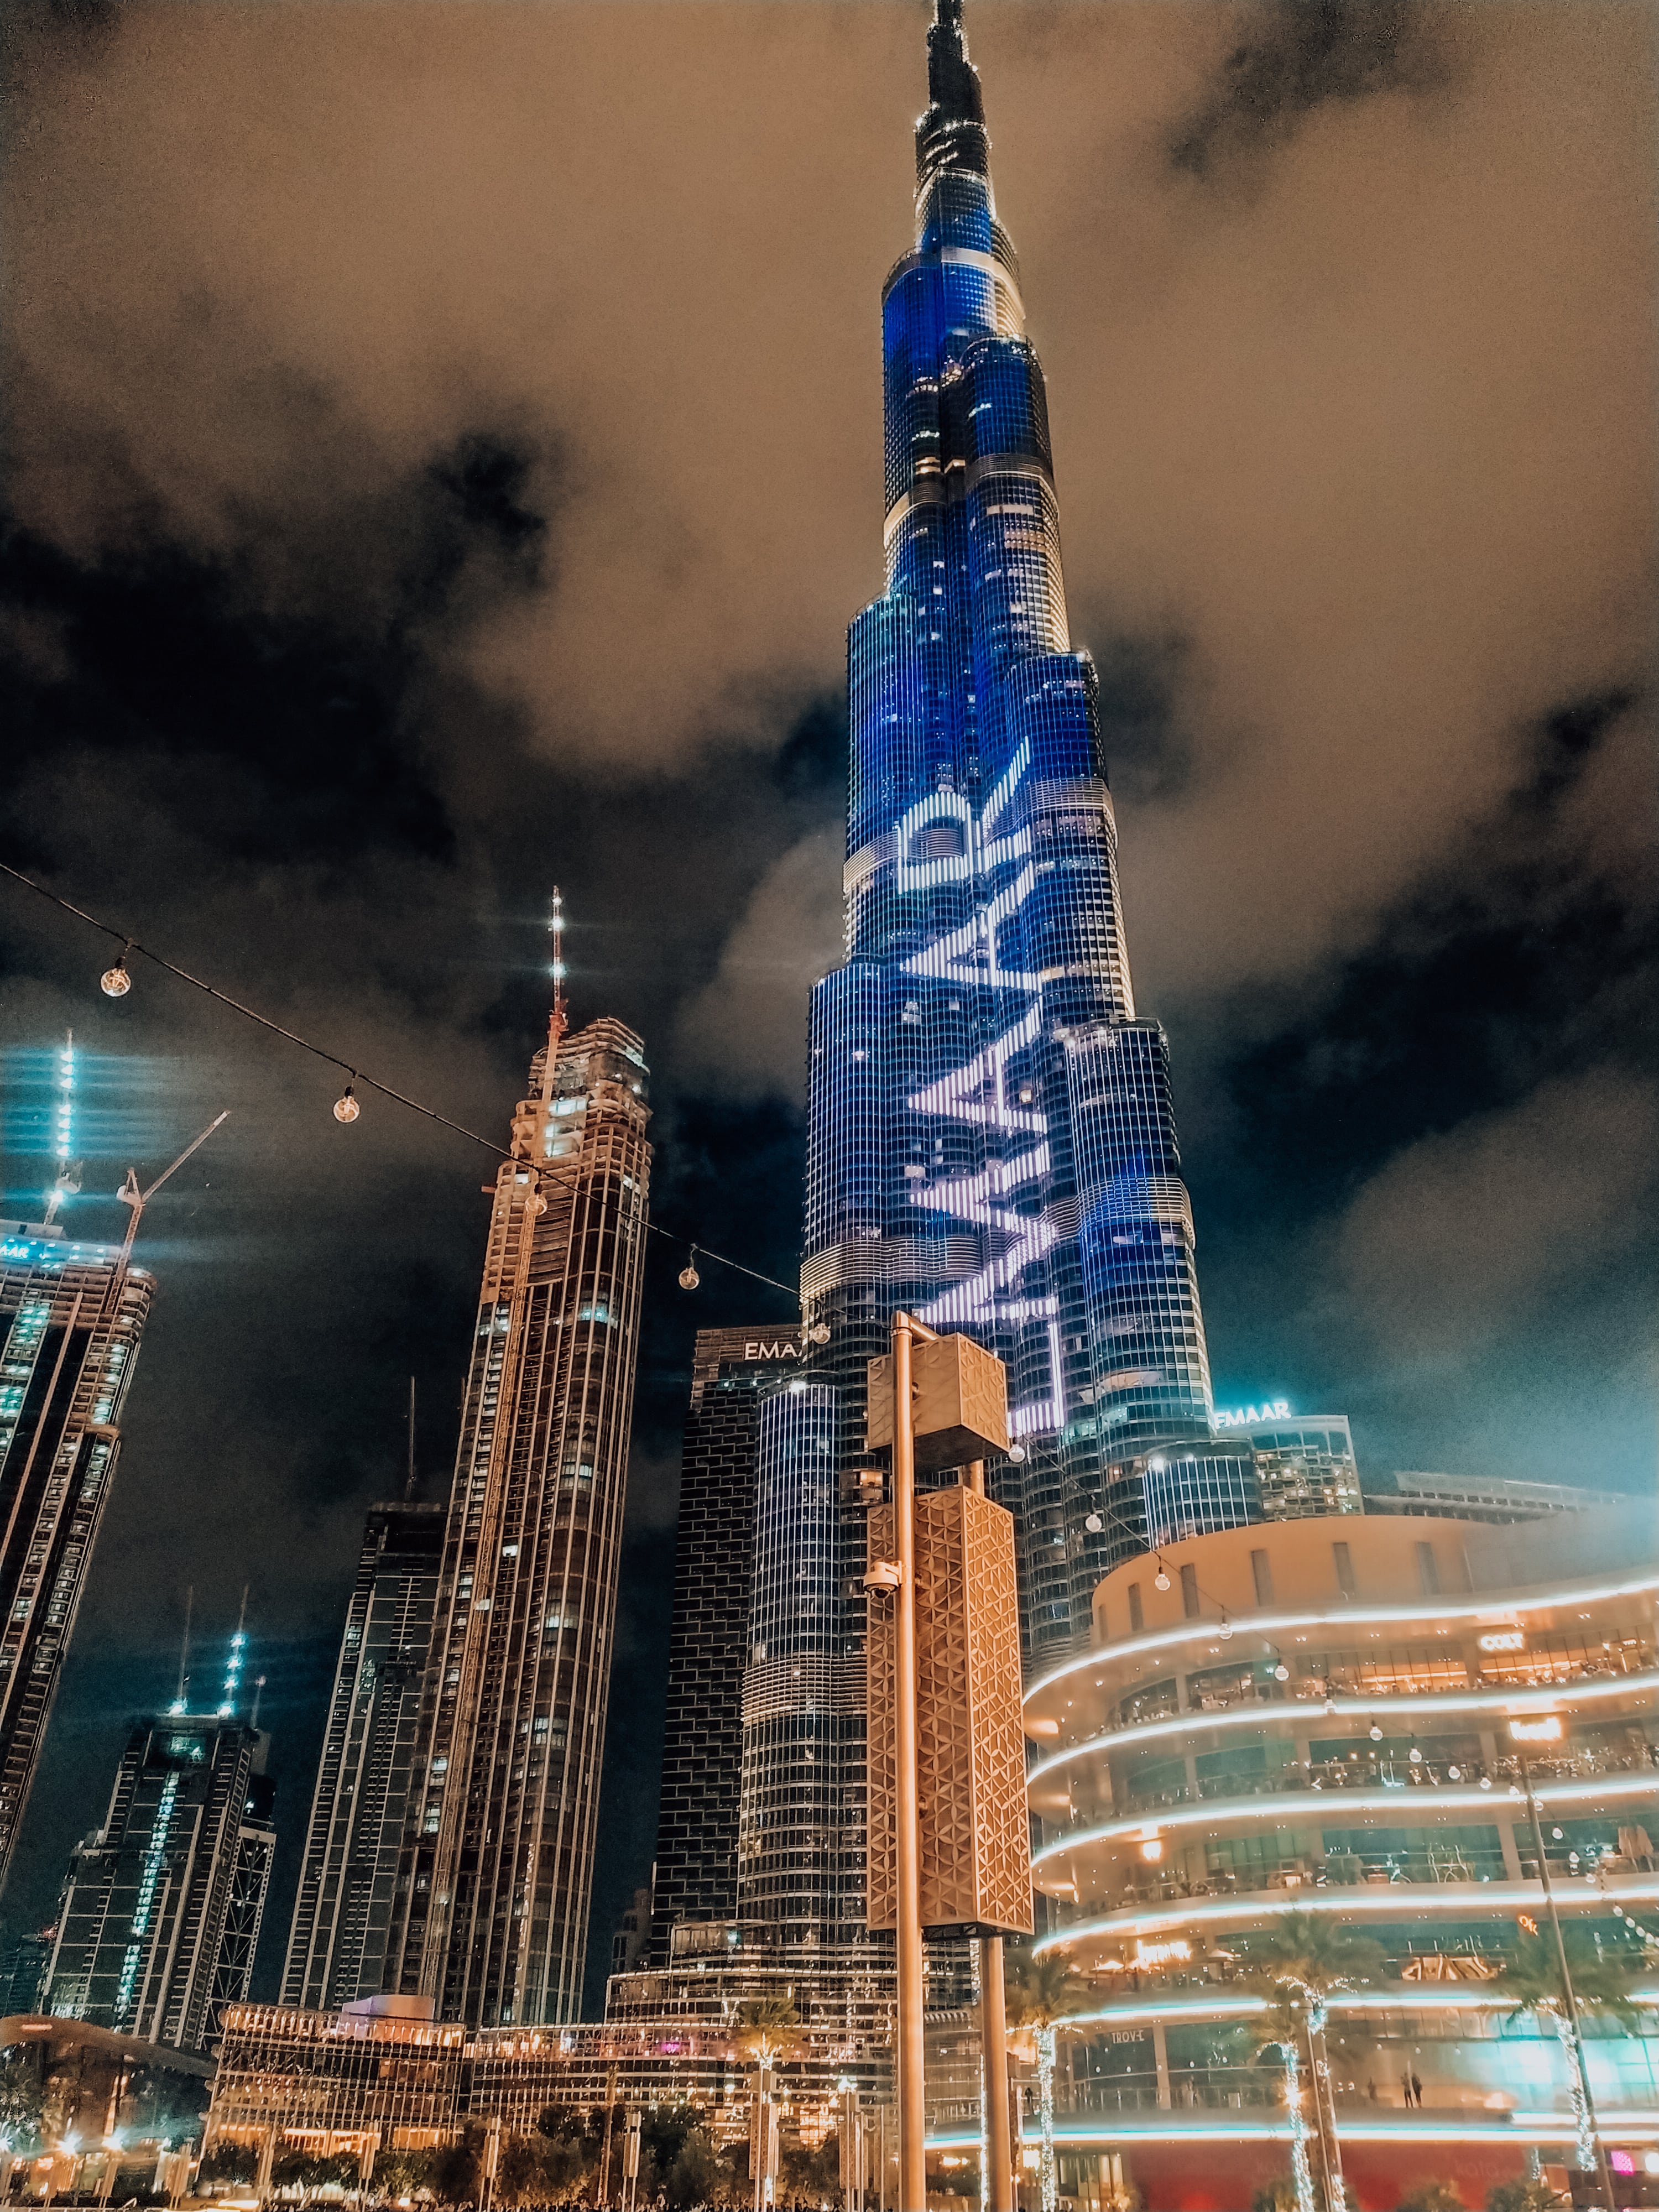 The Dubai Mall Burj Khalifa